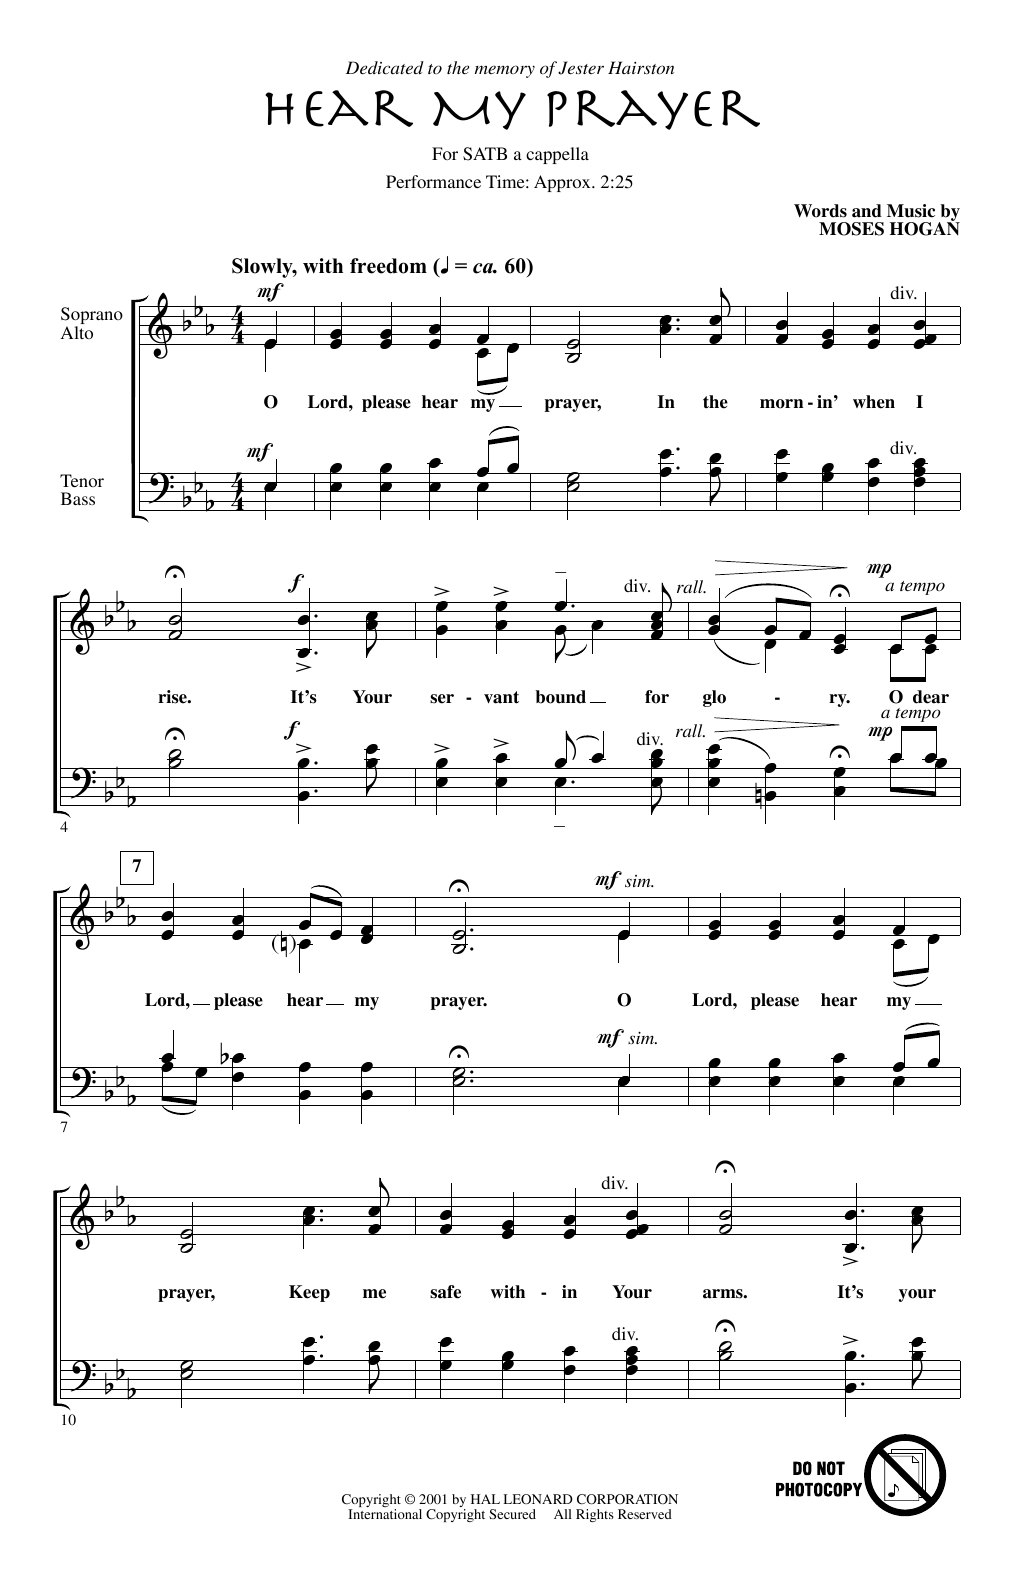 Moses Hogan Hear My Prayer Sheet Music Notes & Chords for SATB Choir - Download or Print PDF